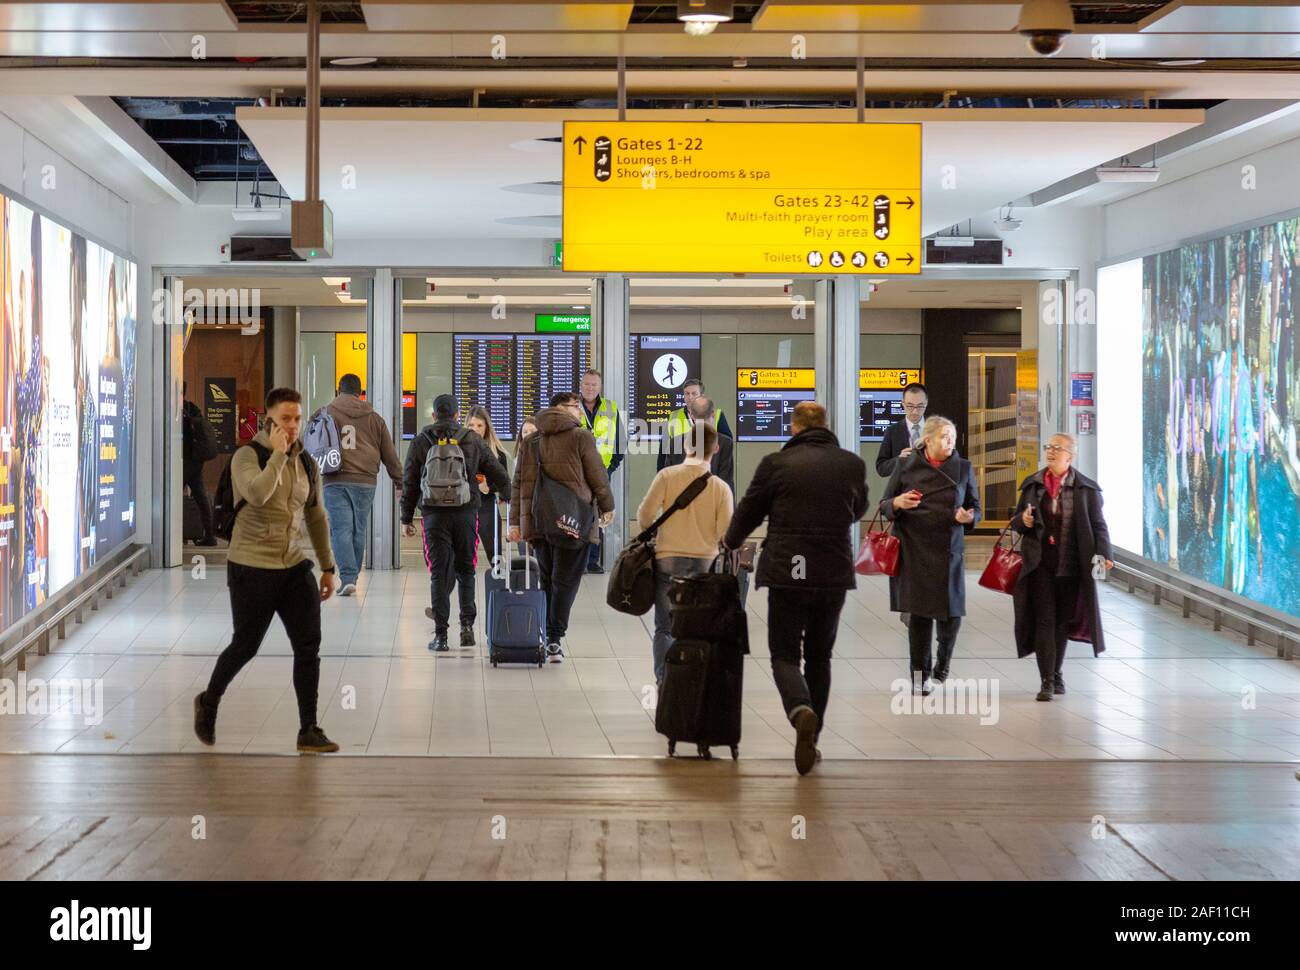 Heathrow terminal 3 interior; People going to the gate, Heathrow airport London UK Stock Photo